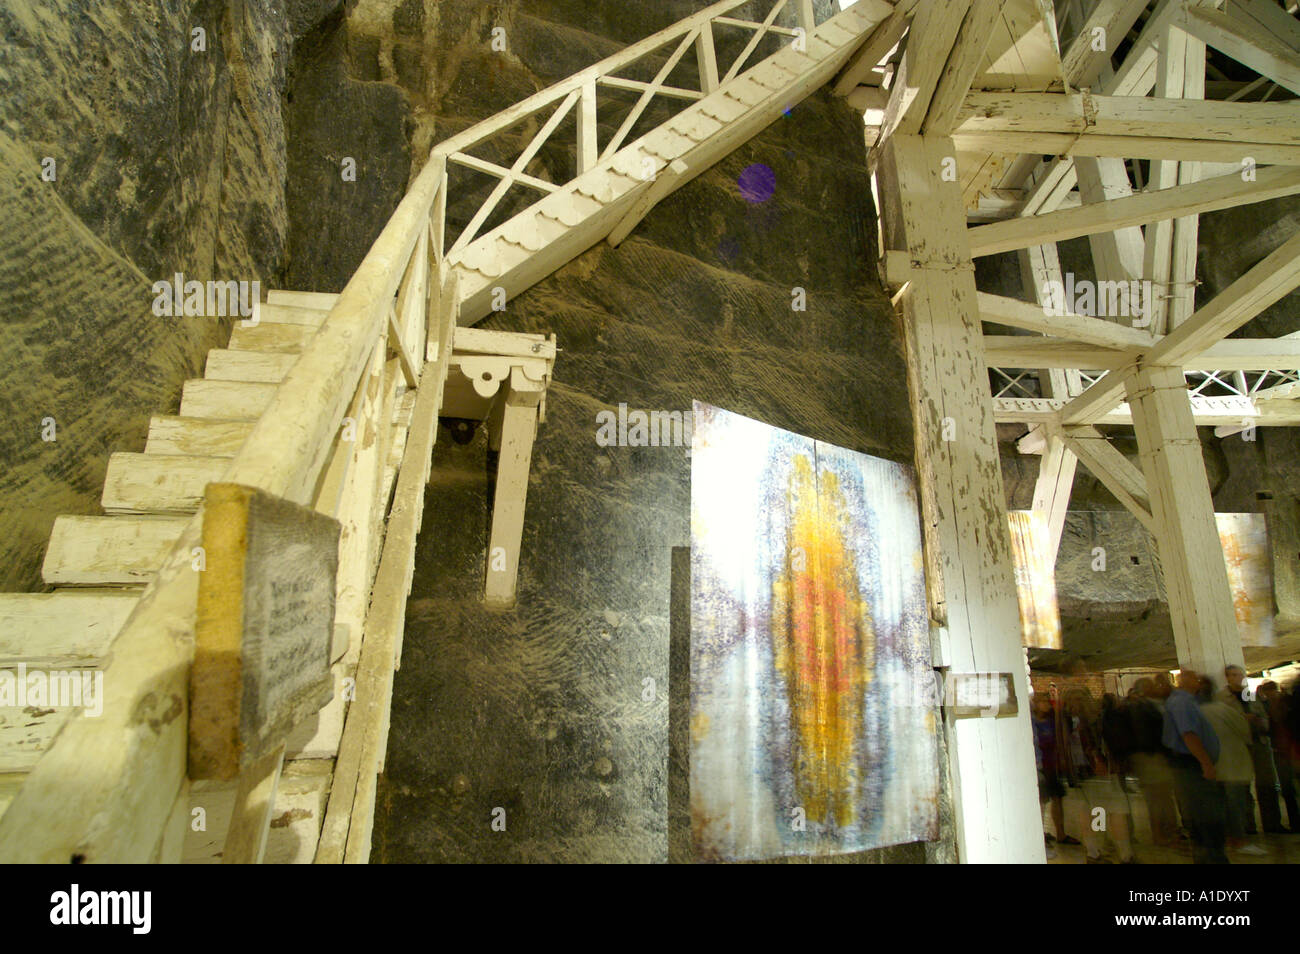 Kopalnia solna Wieliczka salt mine, huge timber support wall reinforcement , Poland 2006 Stock Photo